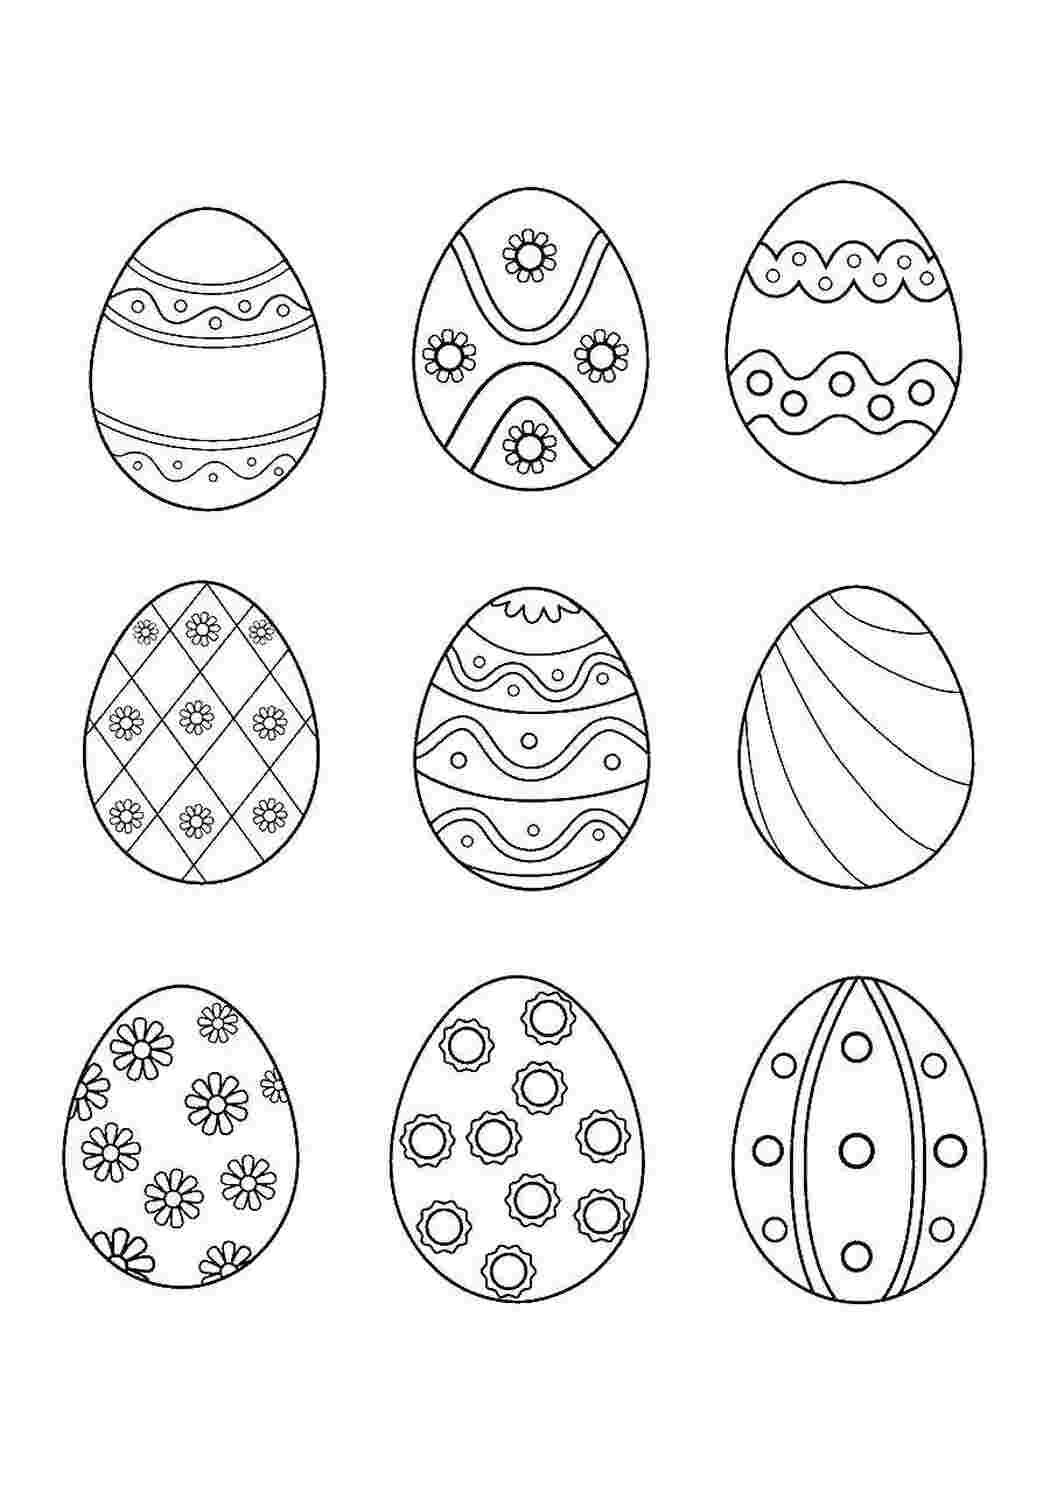 Раскраски яиц на пасху с узорами. пасхальные яйца